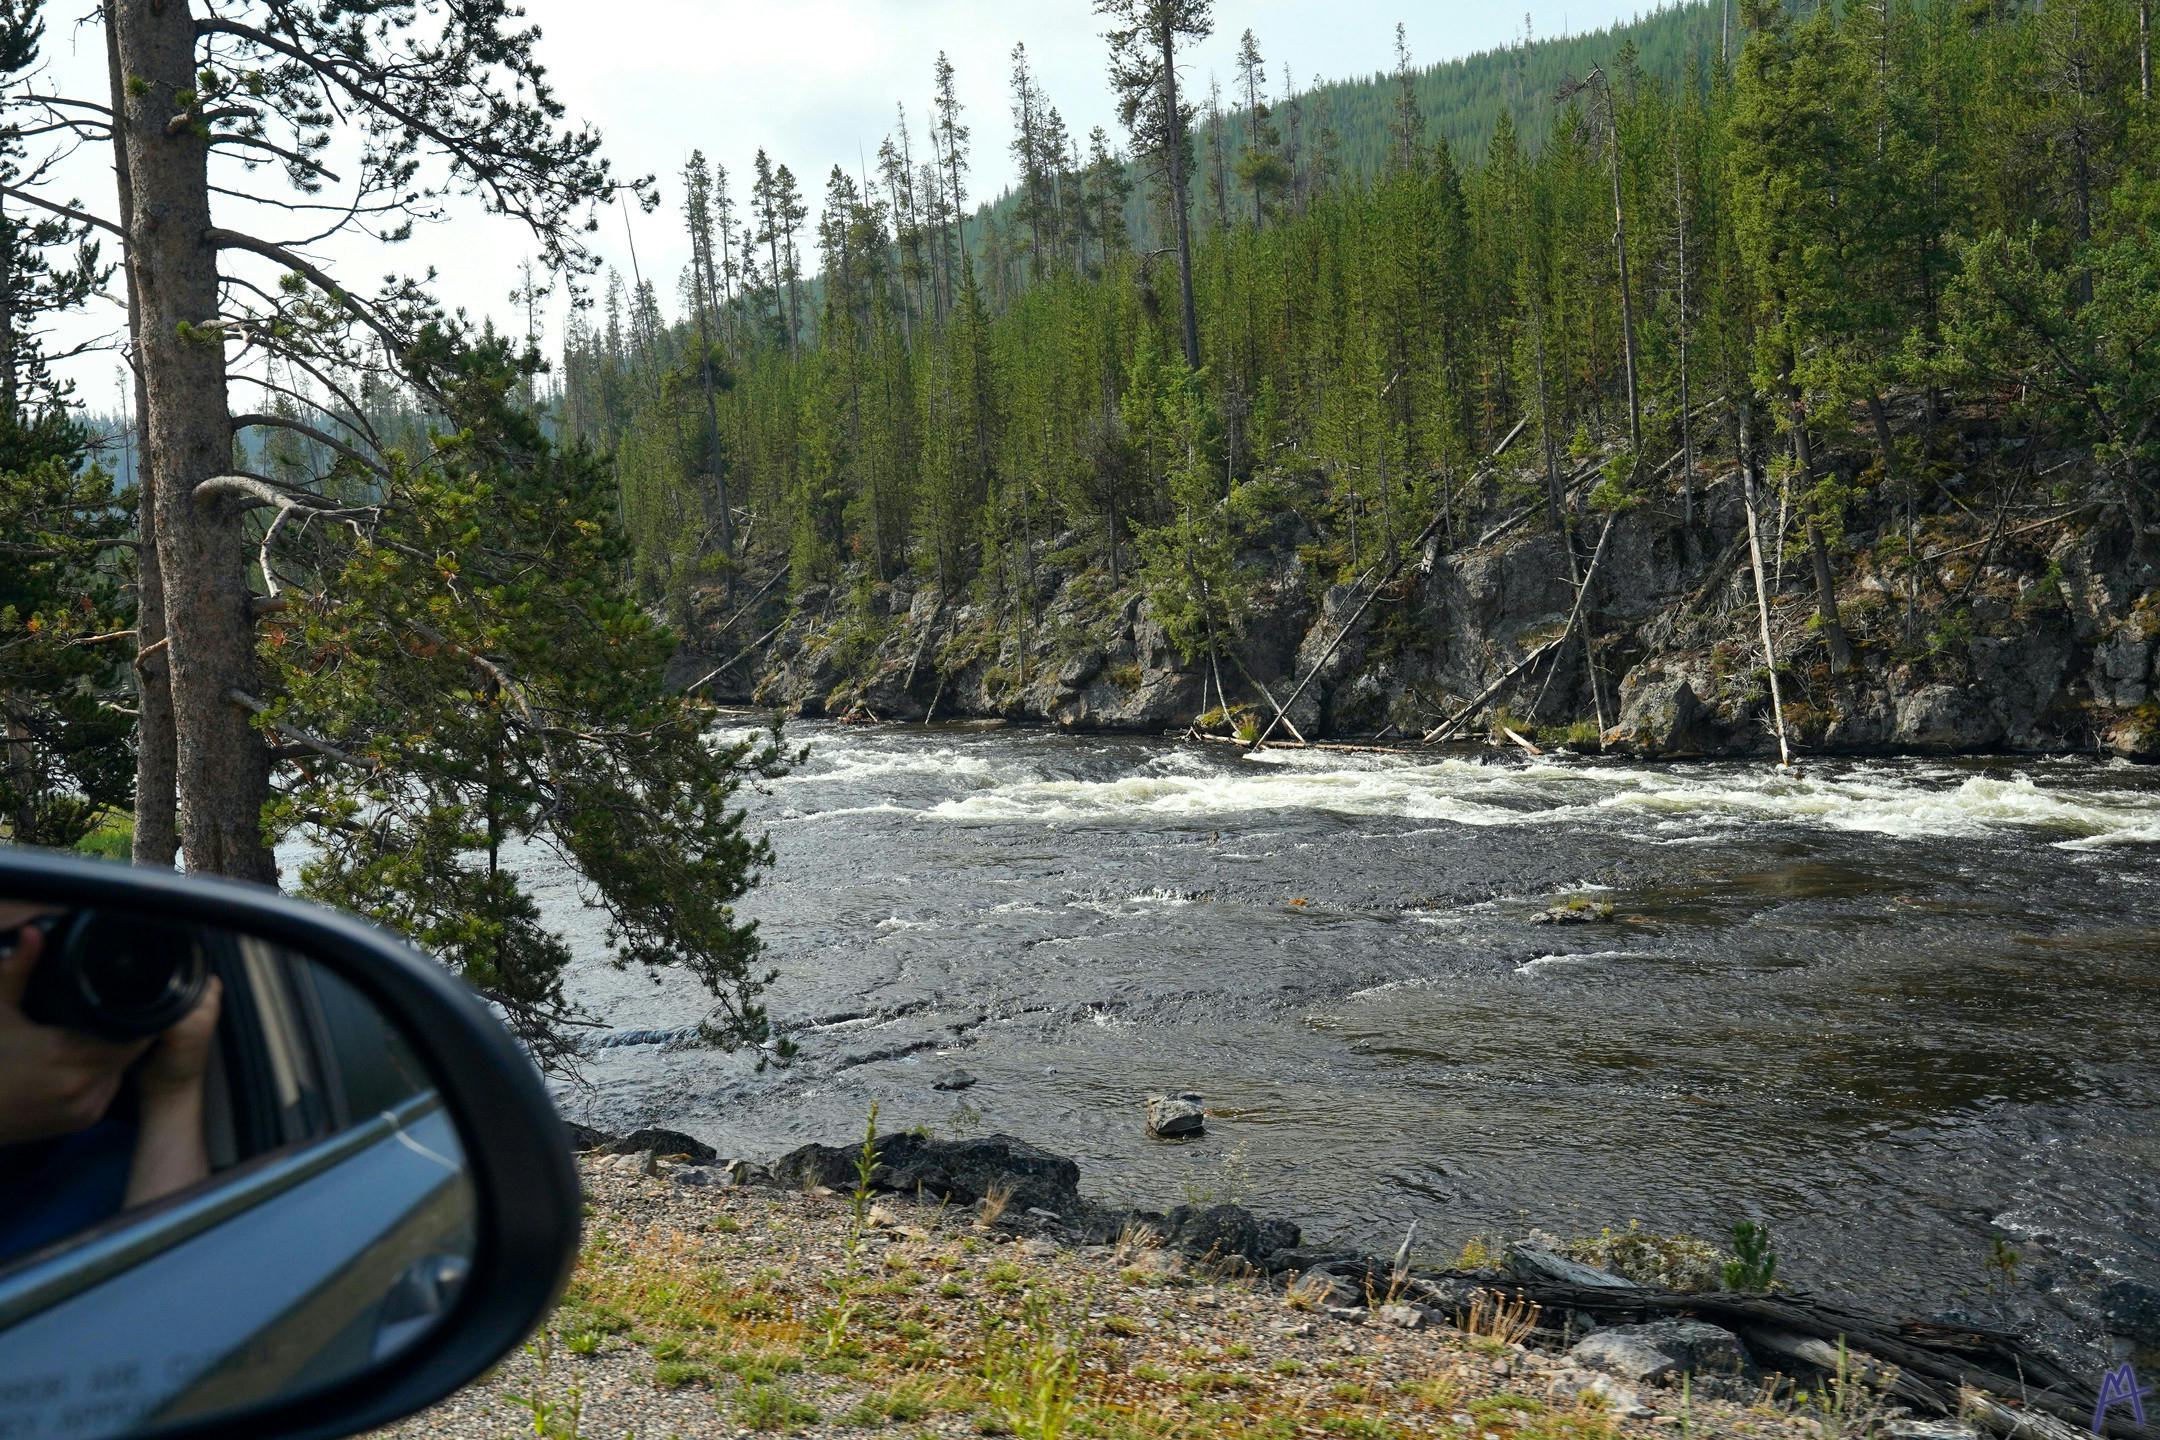 Rushing river through car at Yellowstone